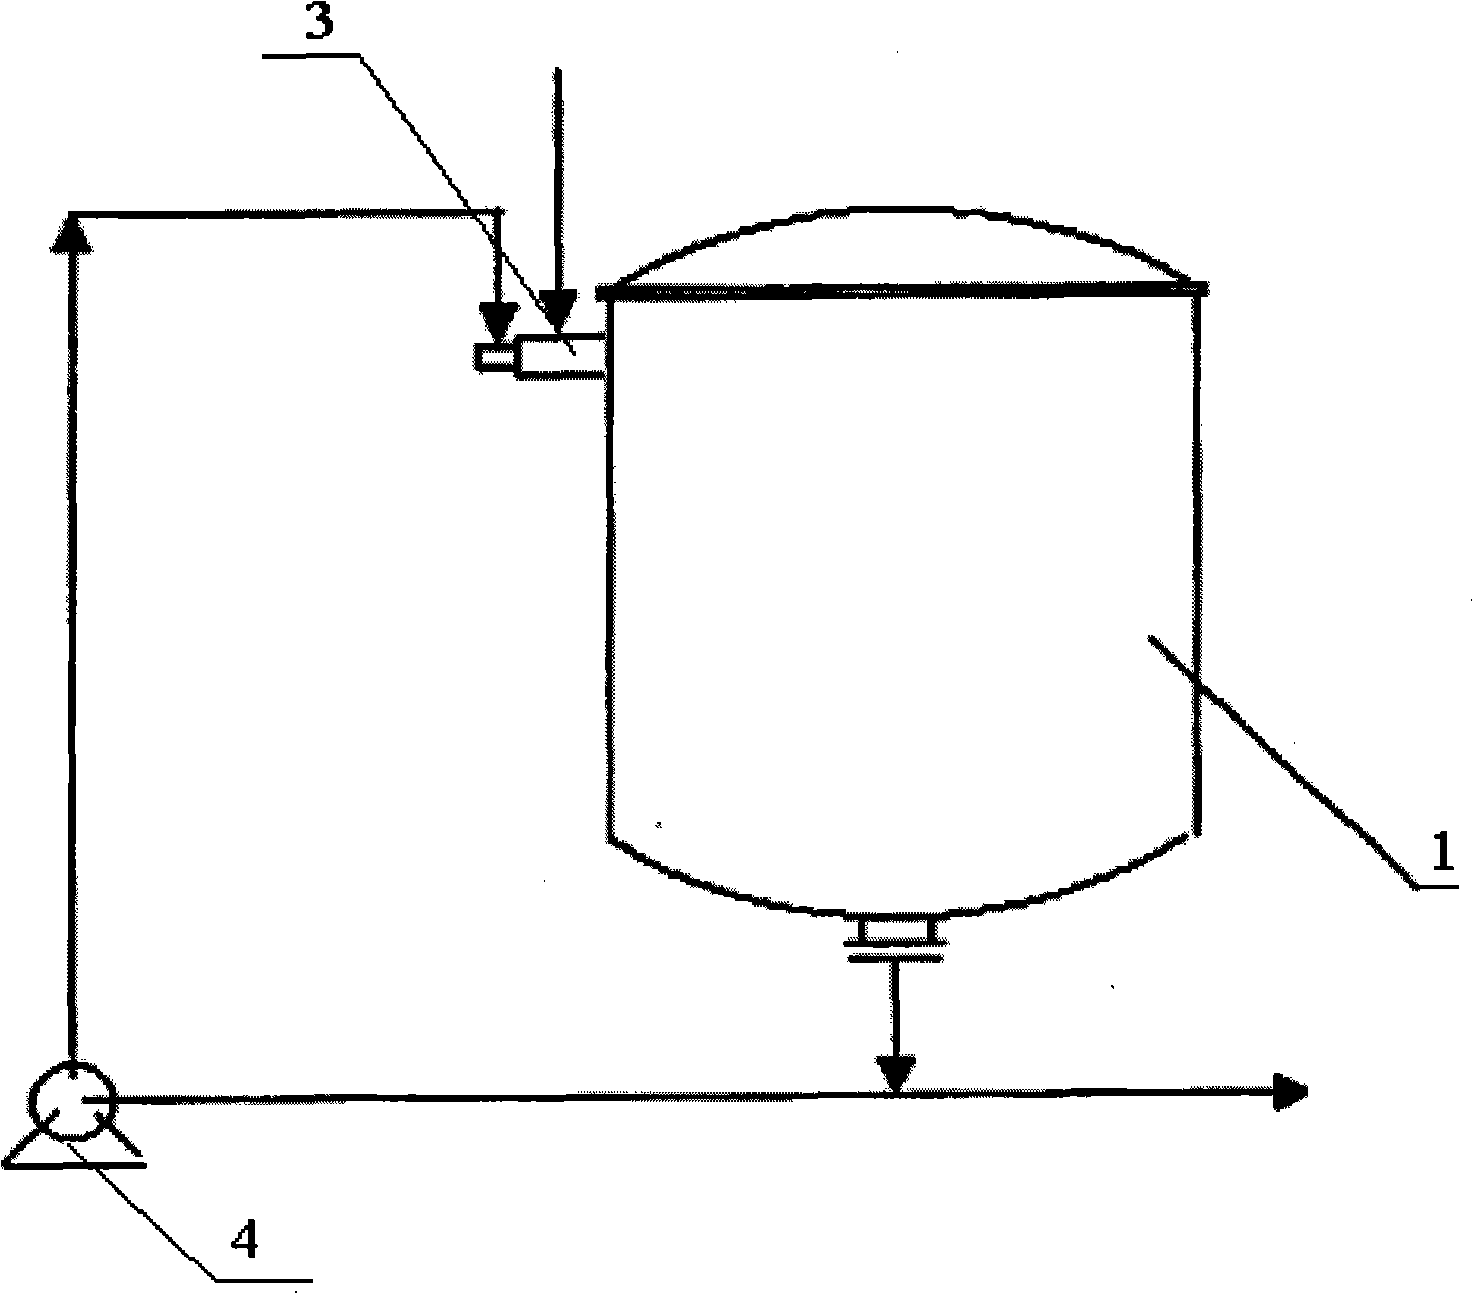 Method for synthesizing 1,2,4-butanetriol